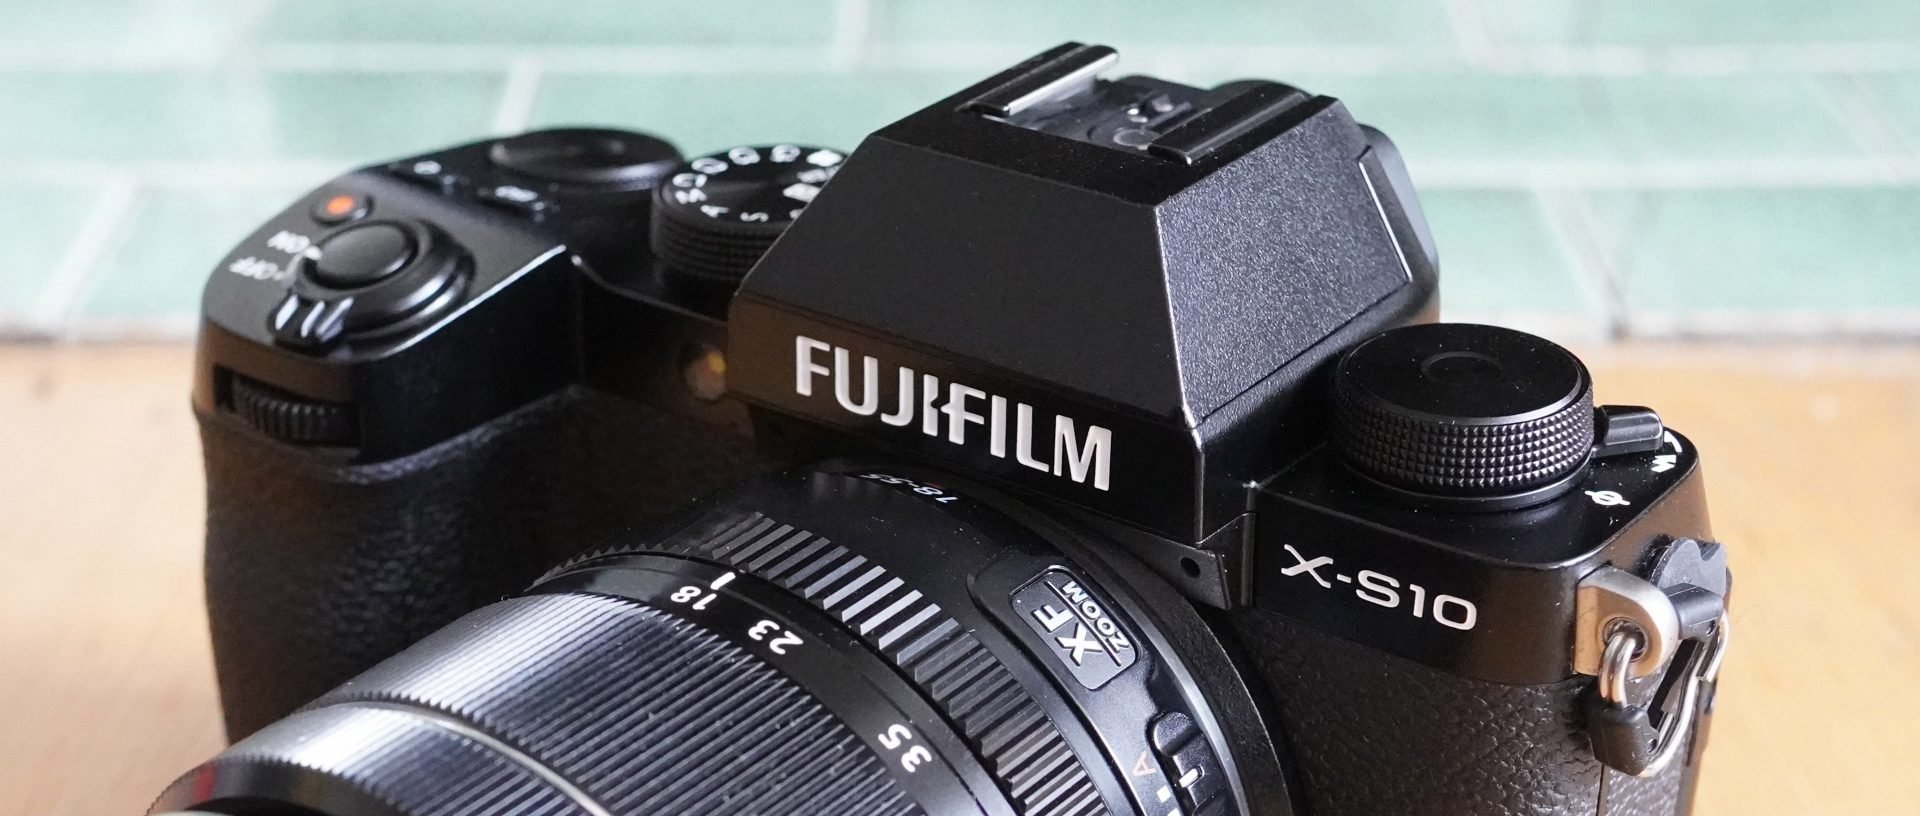 Fujifilm XS10 review so far | Cameralabs